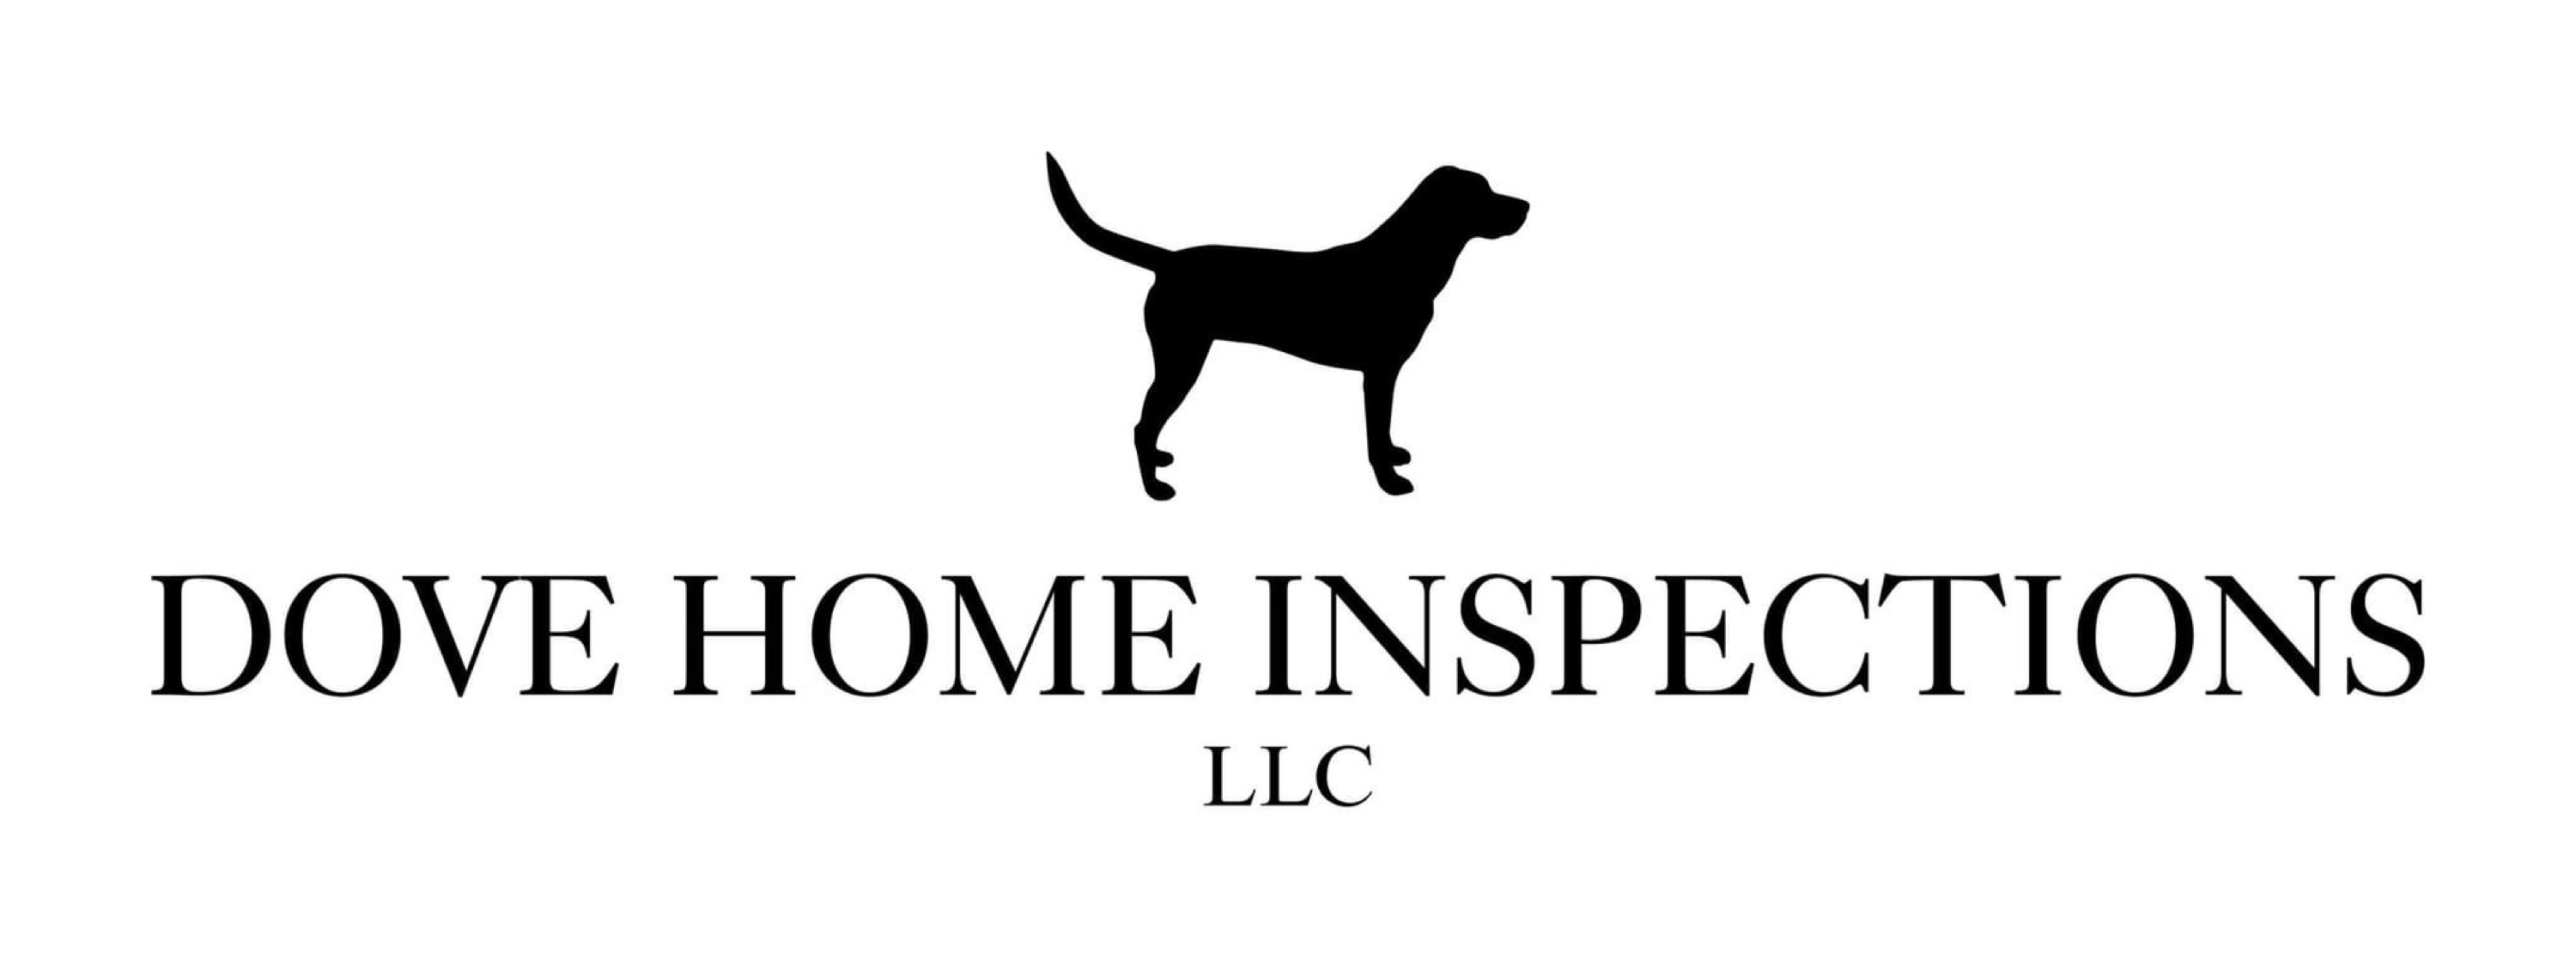 Dove Home Inspections LLC Logo